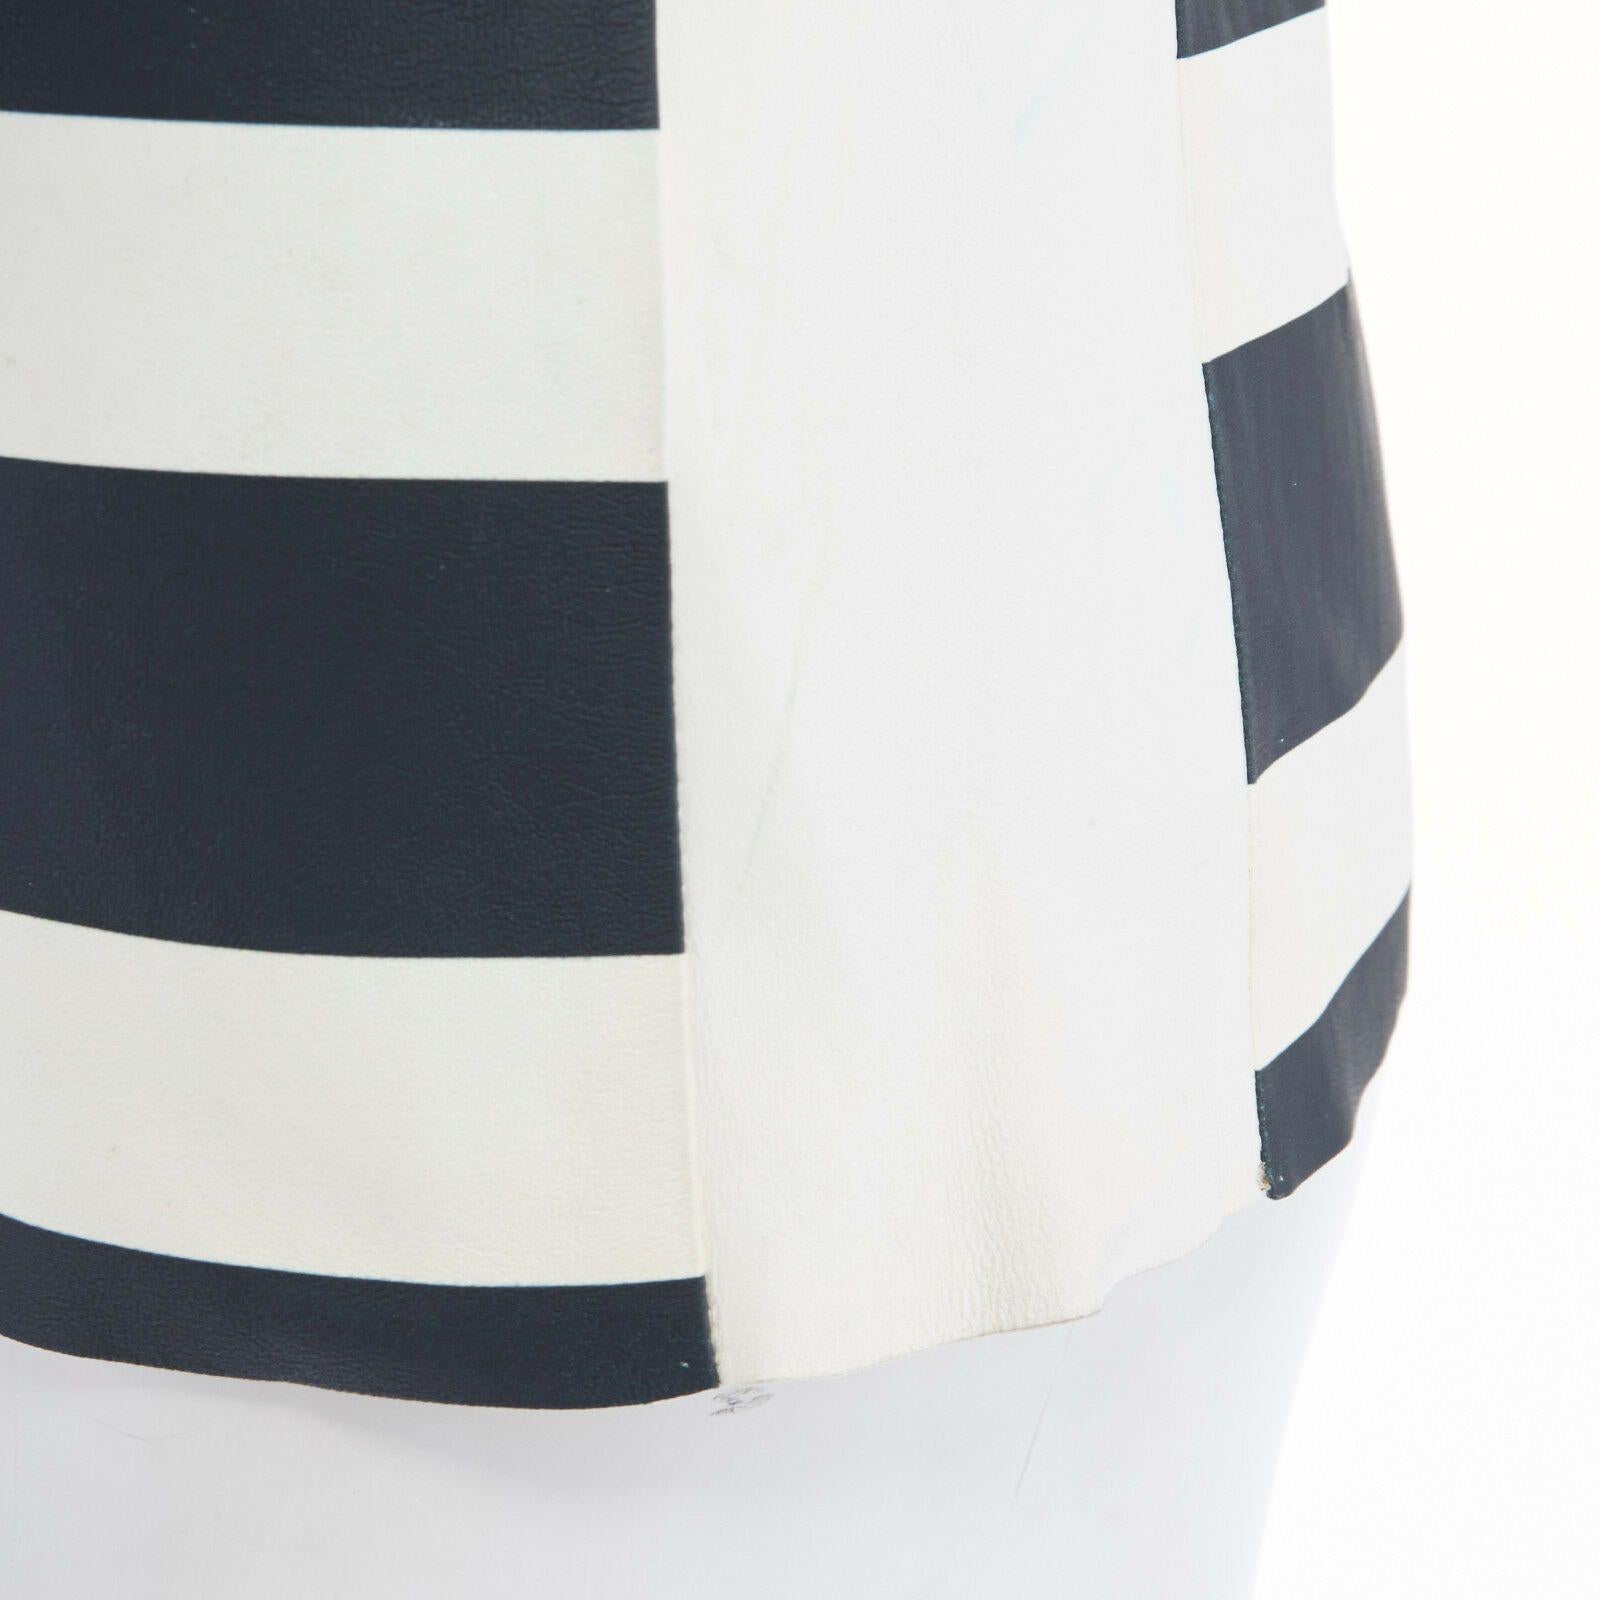 Women's new CELINE PHOEBE PHILO white black green stripe print leather top FR34 US2 S